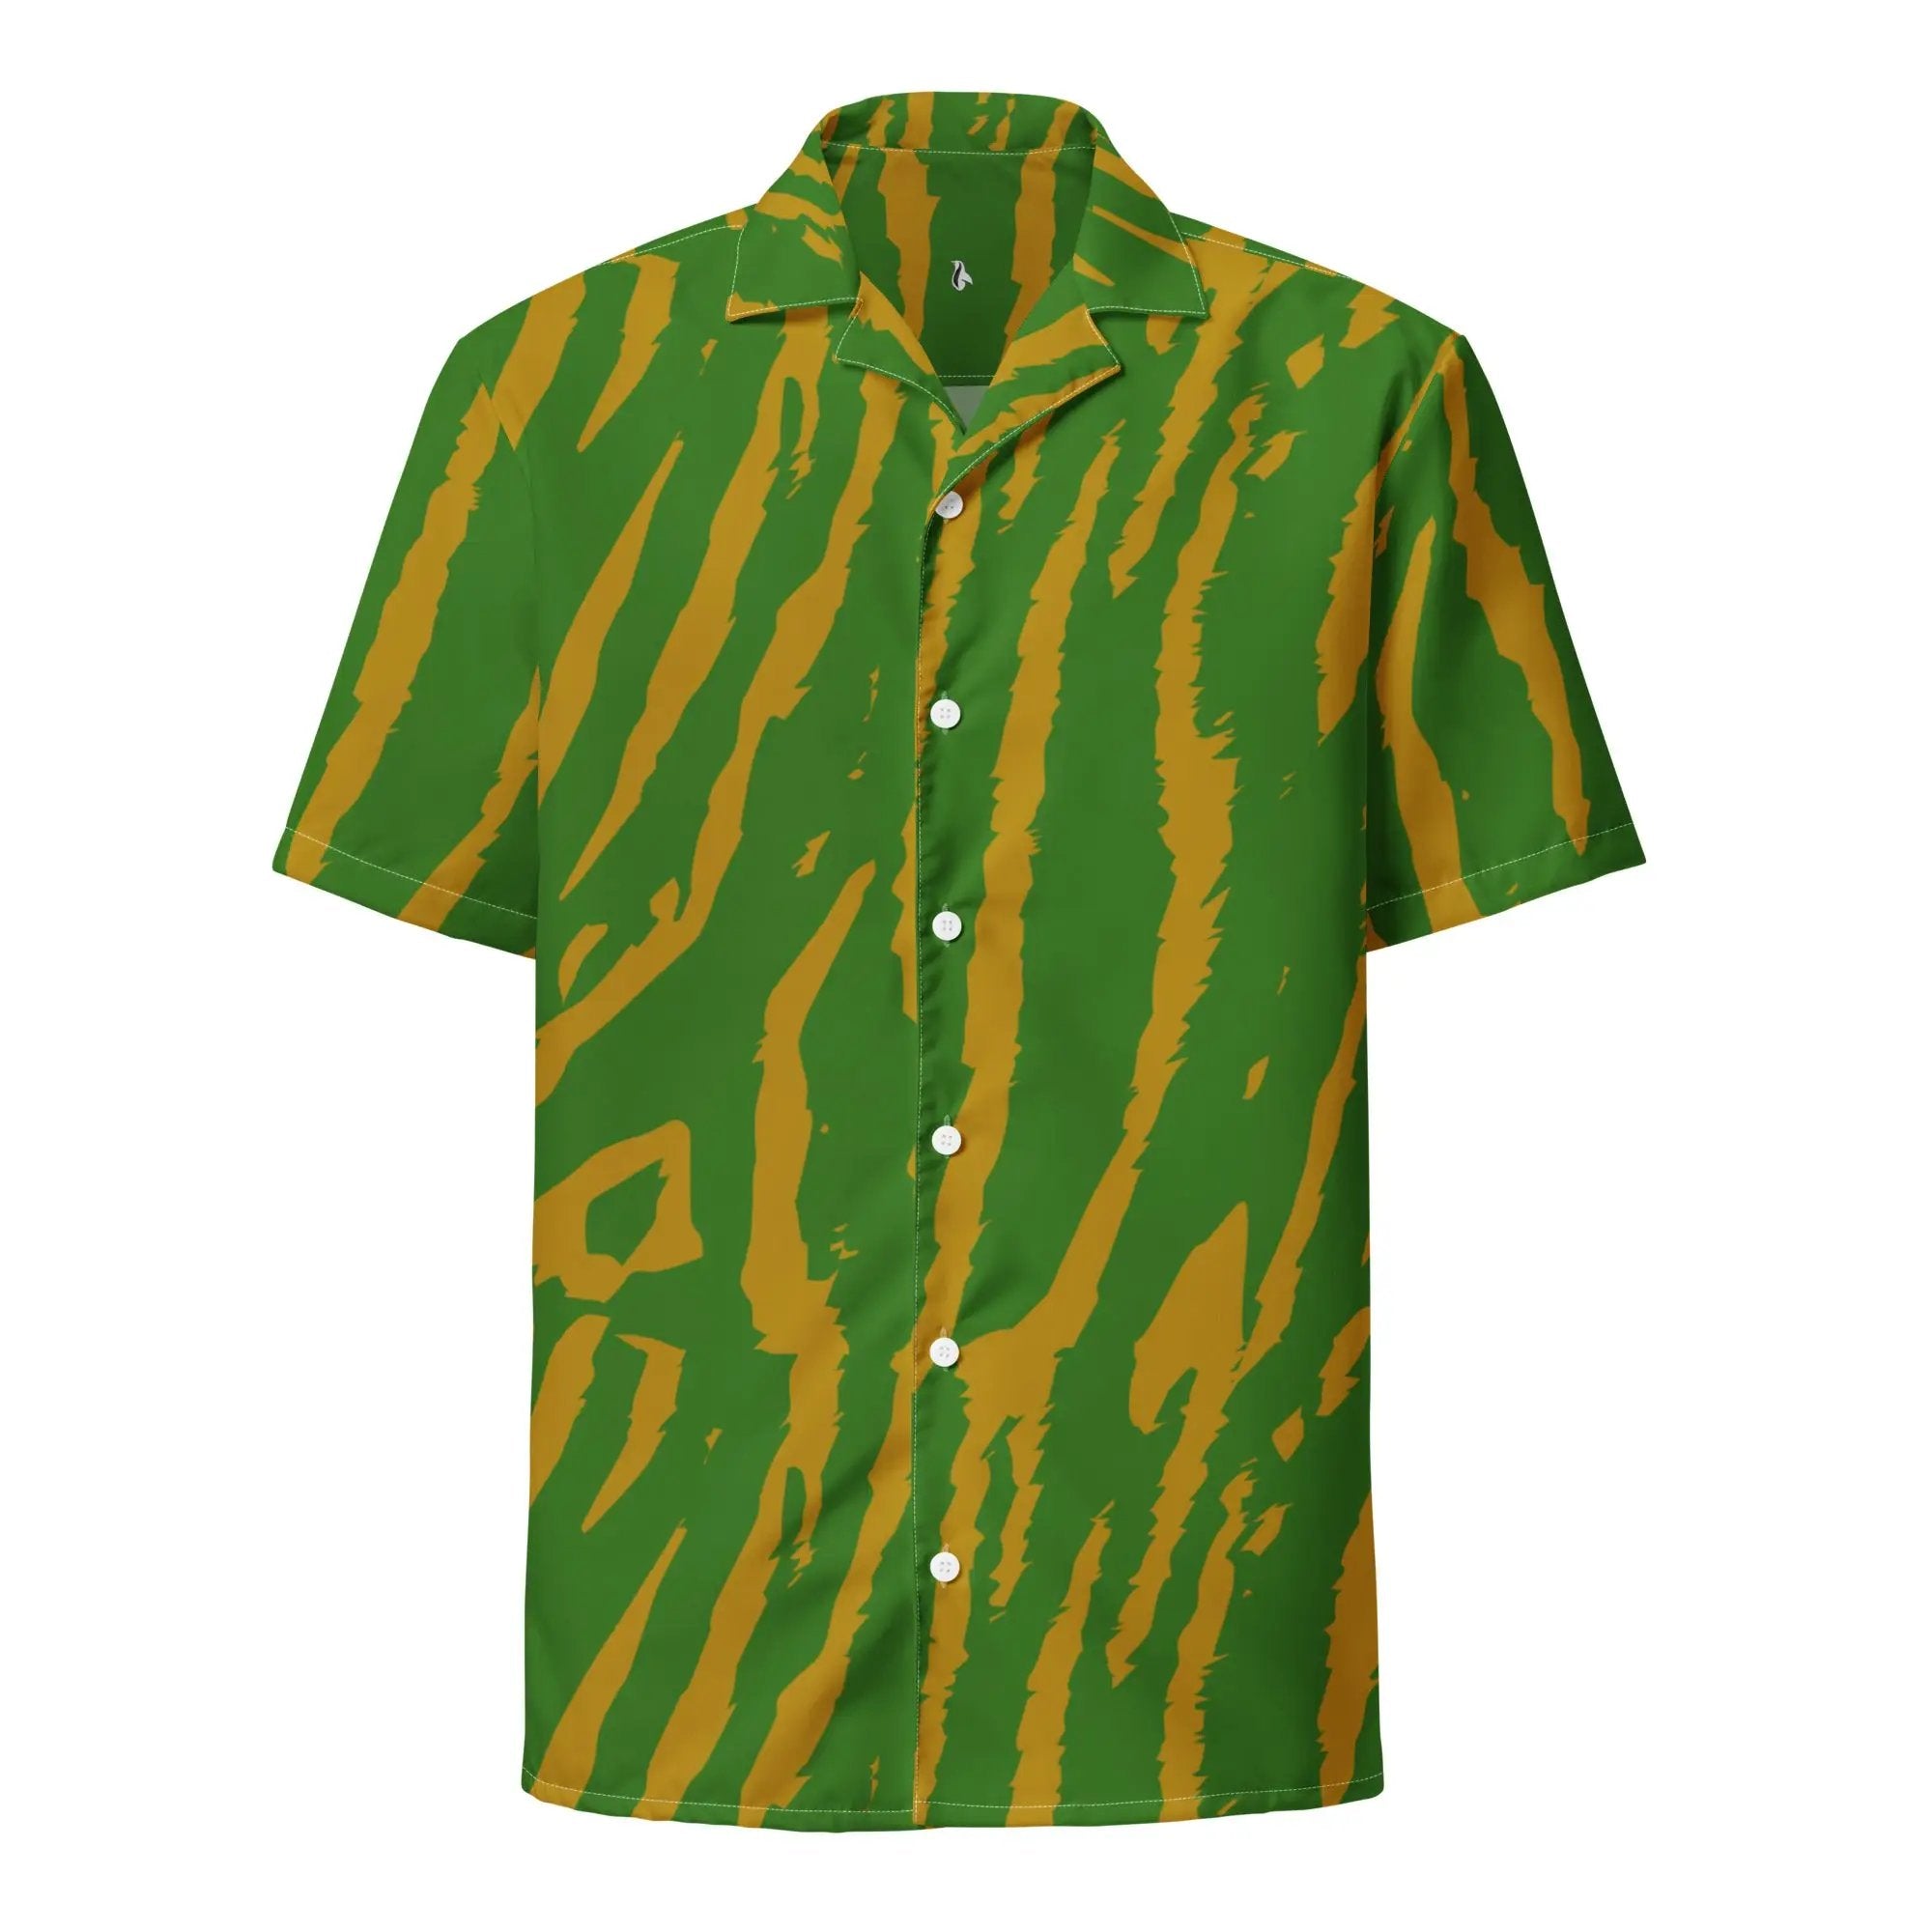 Cringer Tiger Print Unisex button shirt